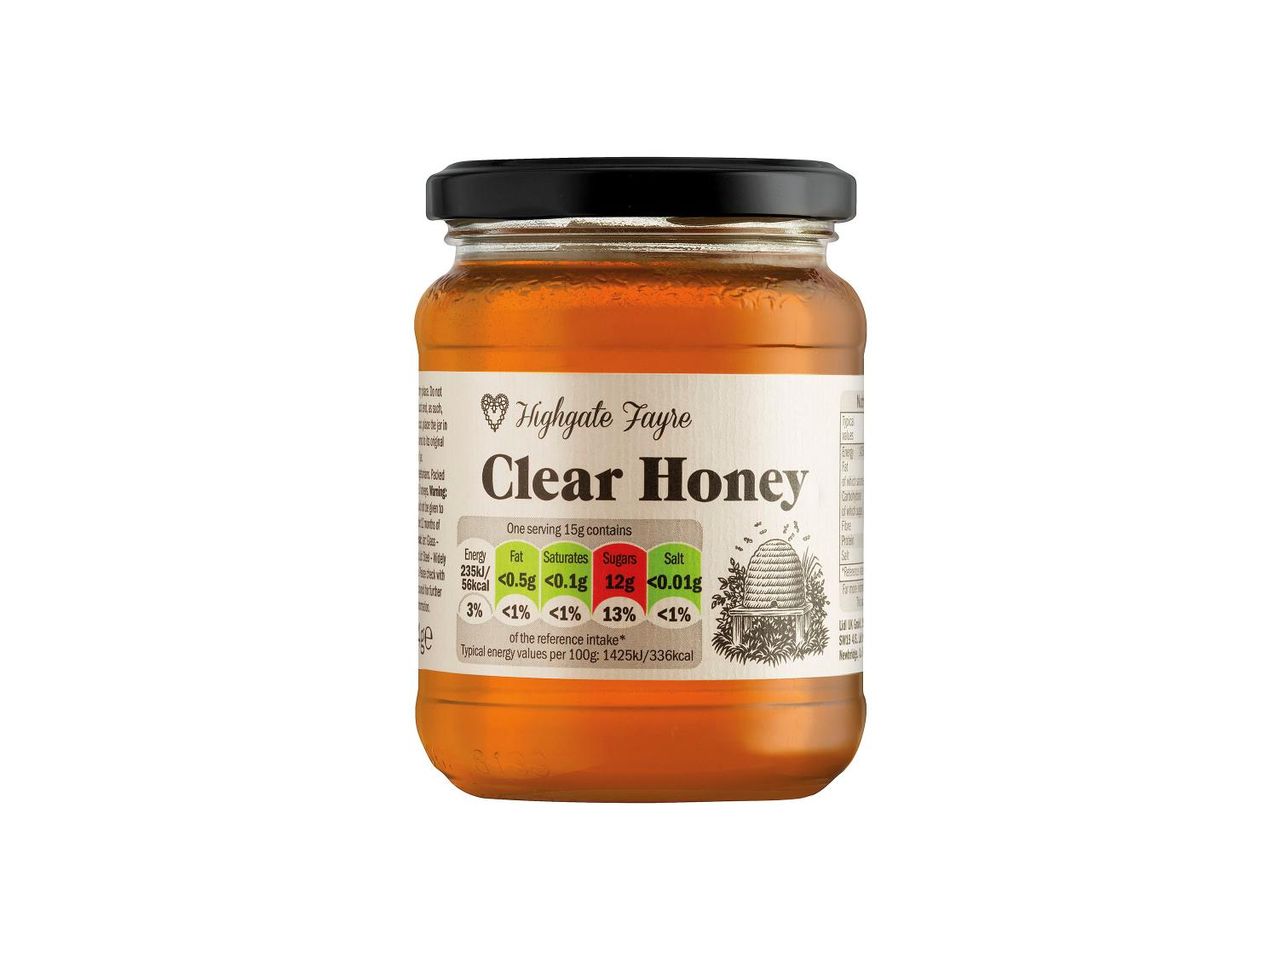 Go to full screen view: Highgate Fayre Clear Honey - Image 1